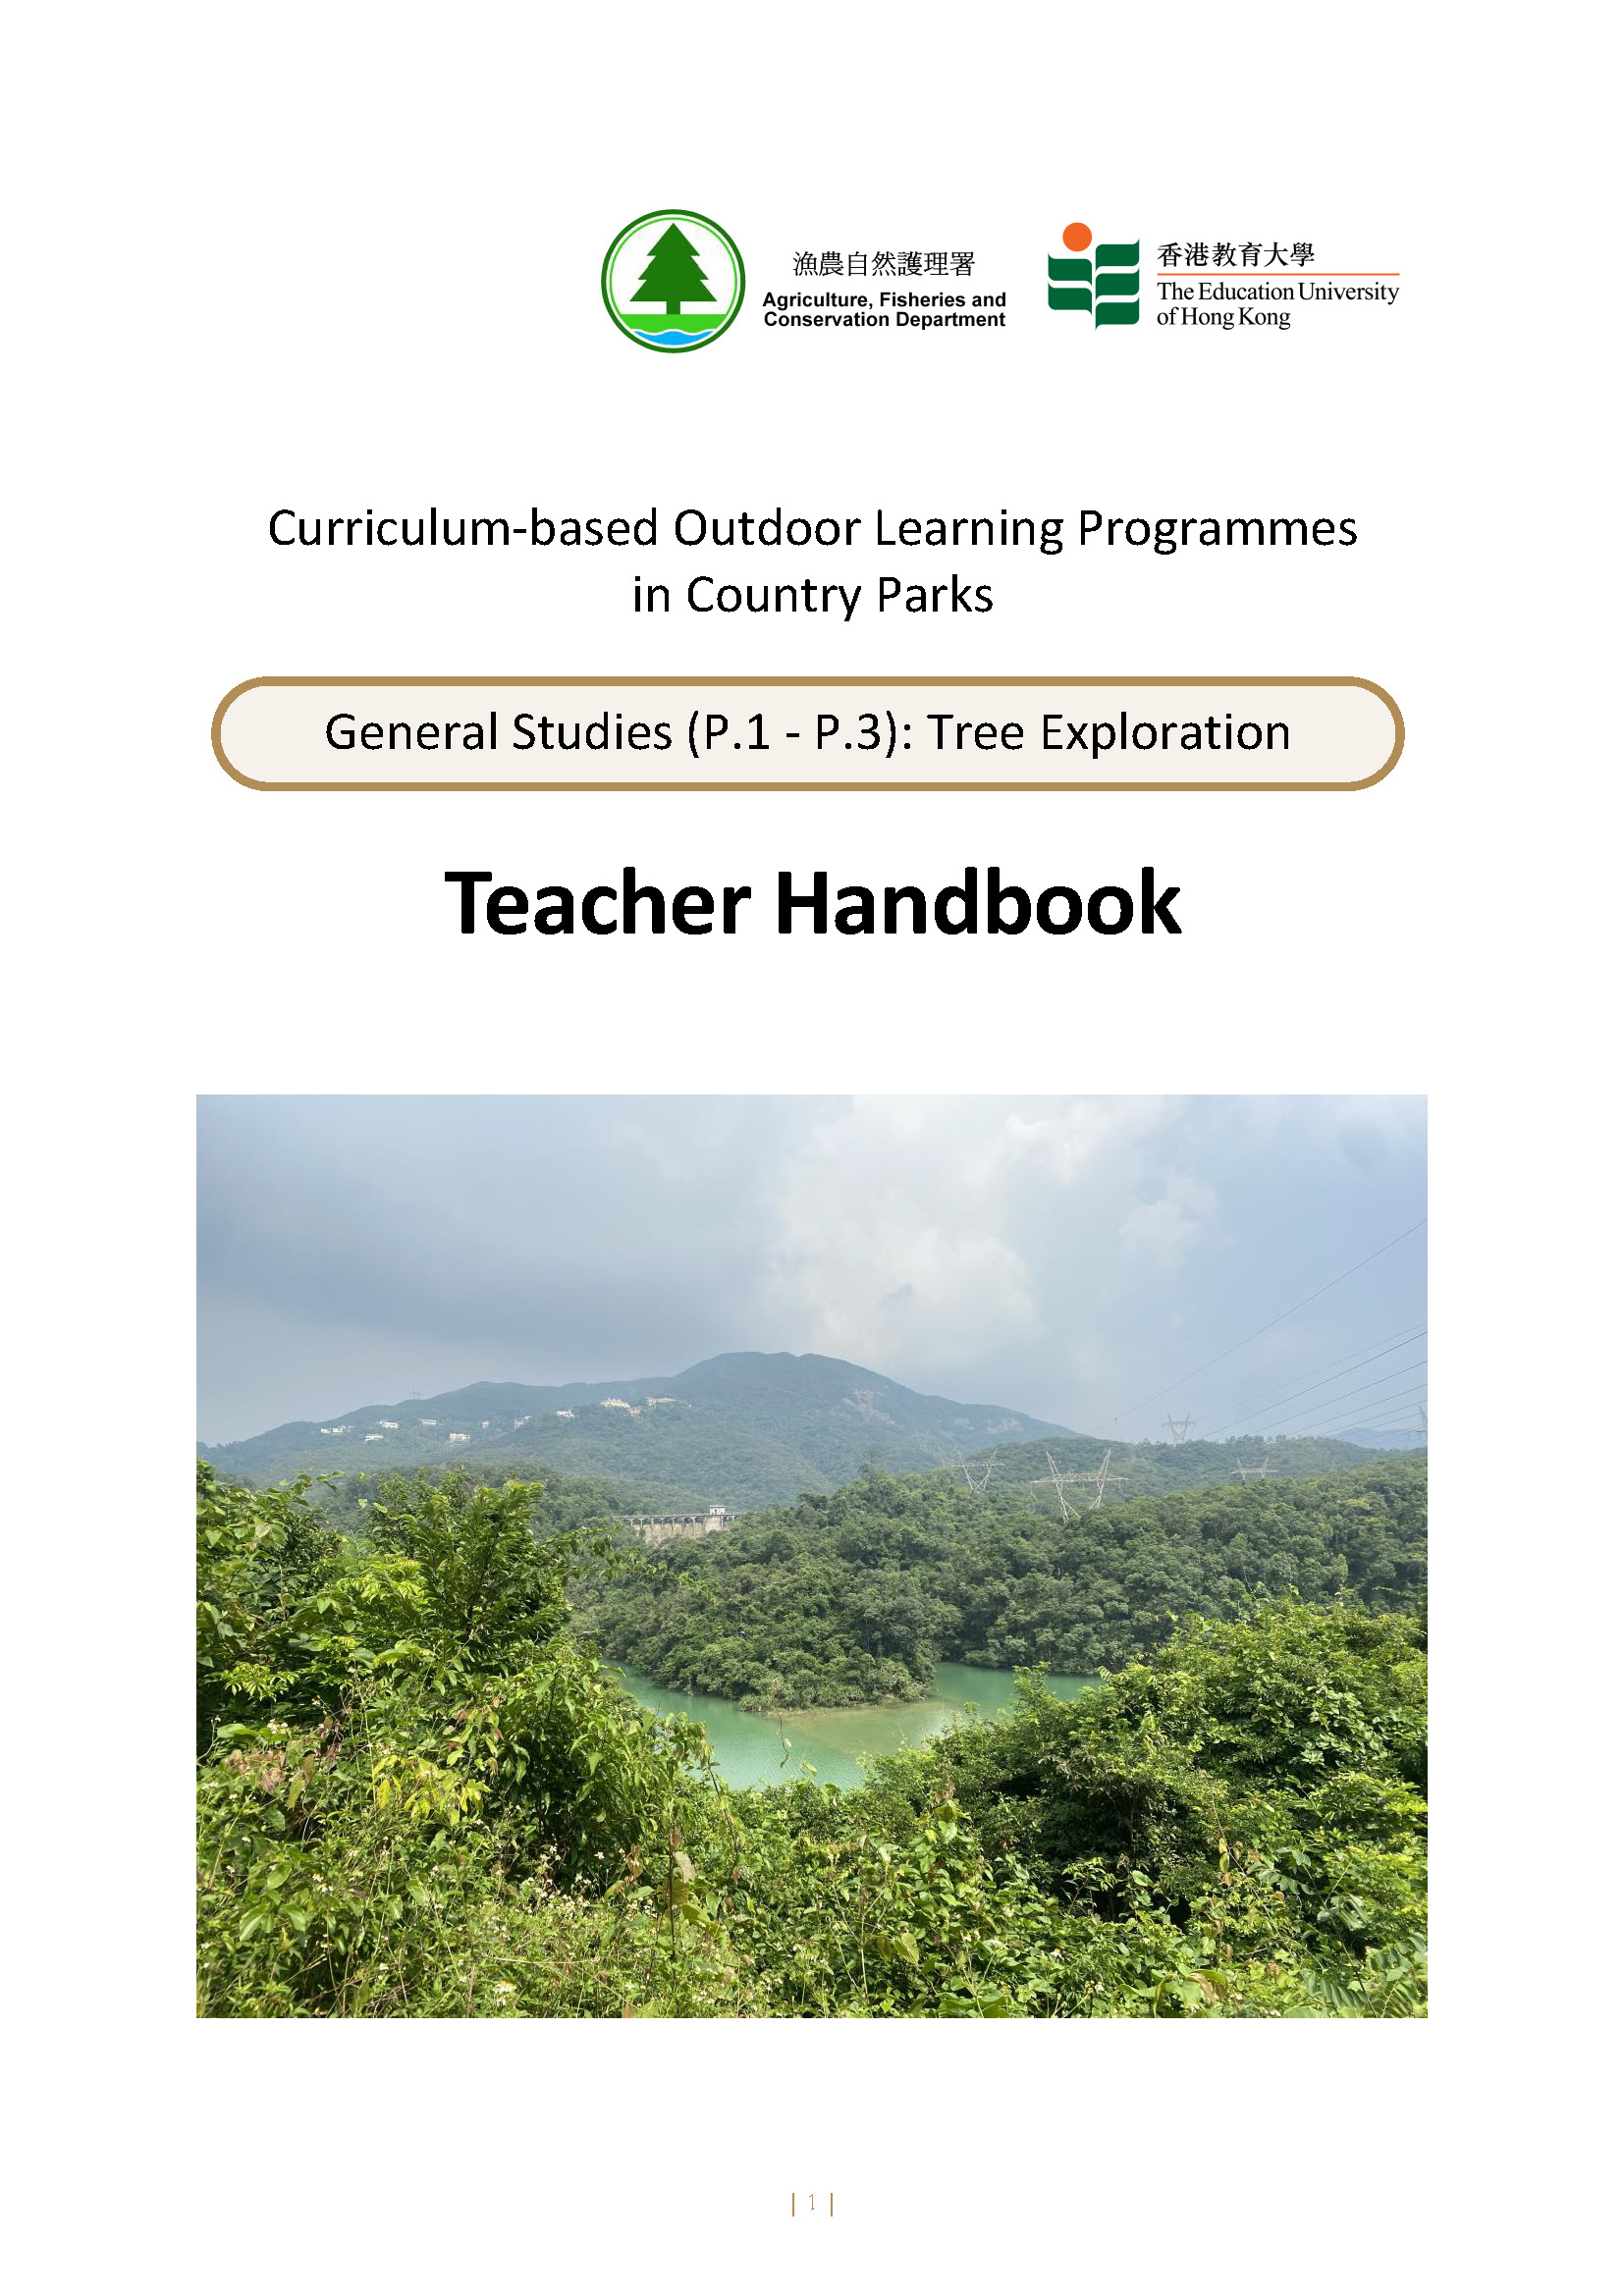 Download Field Book of Tree Exploration (Teacher)